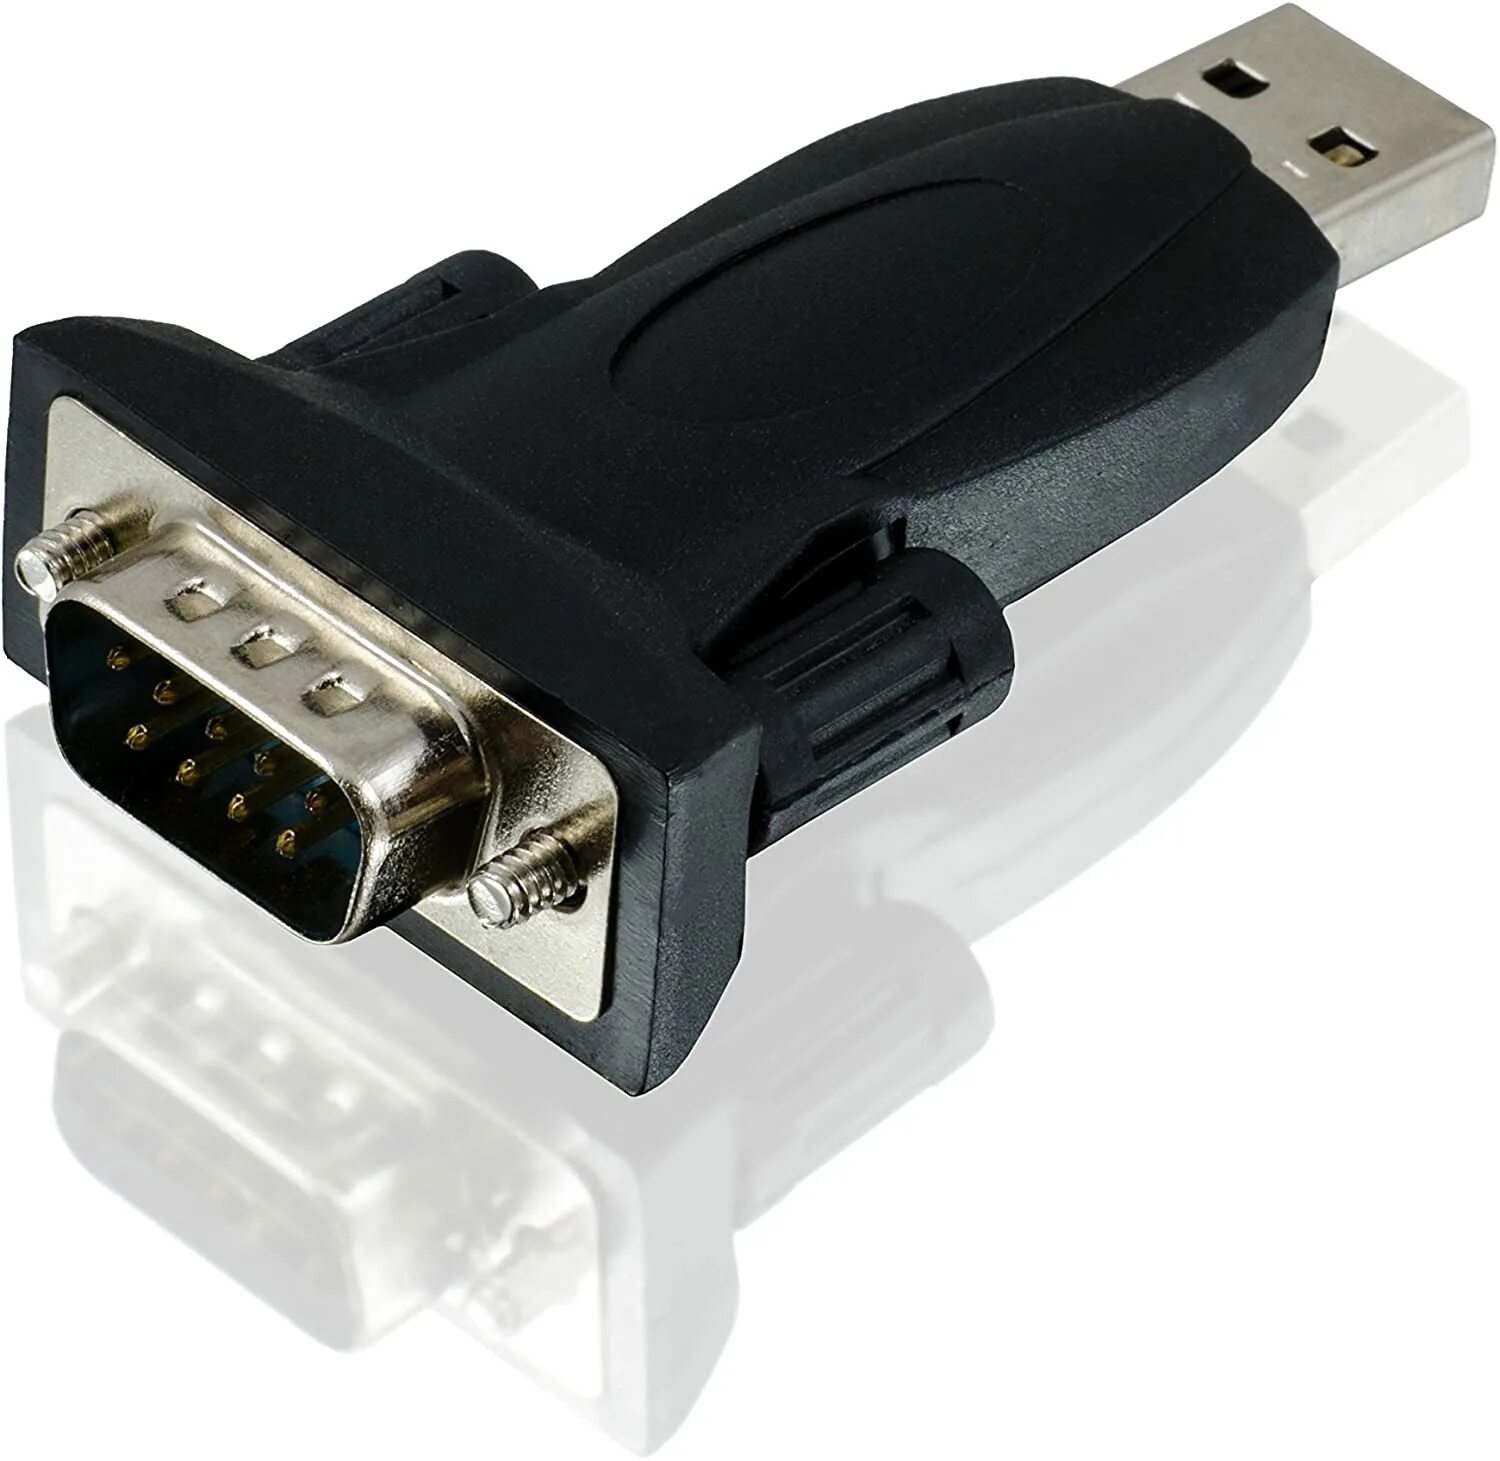 Адаптер USB-rs232. USB-rs232 prolific pl-2303. USB com rs232 переходник Hama. Адаптер rs232 USB female. Адаптер 232